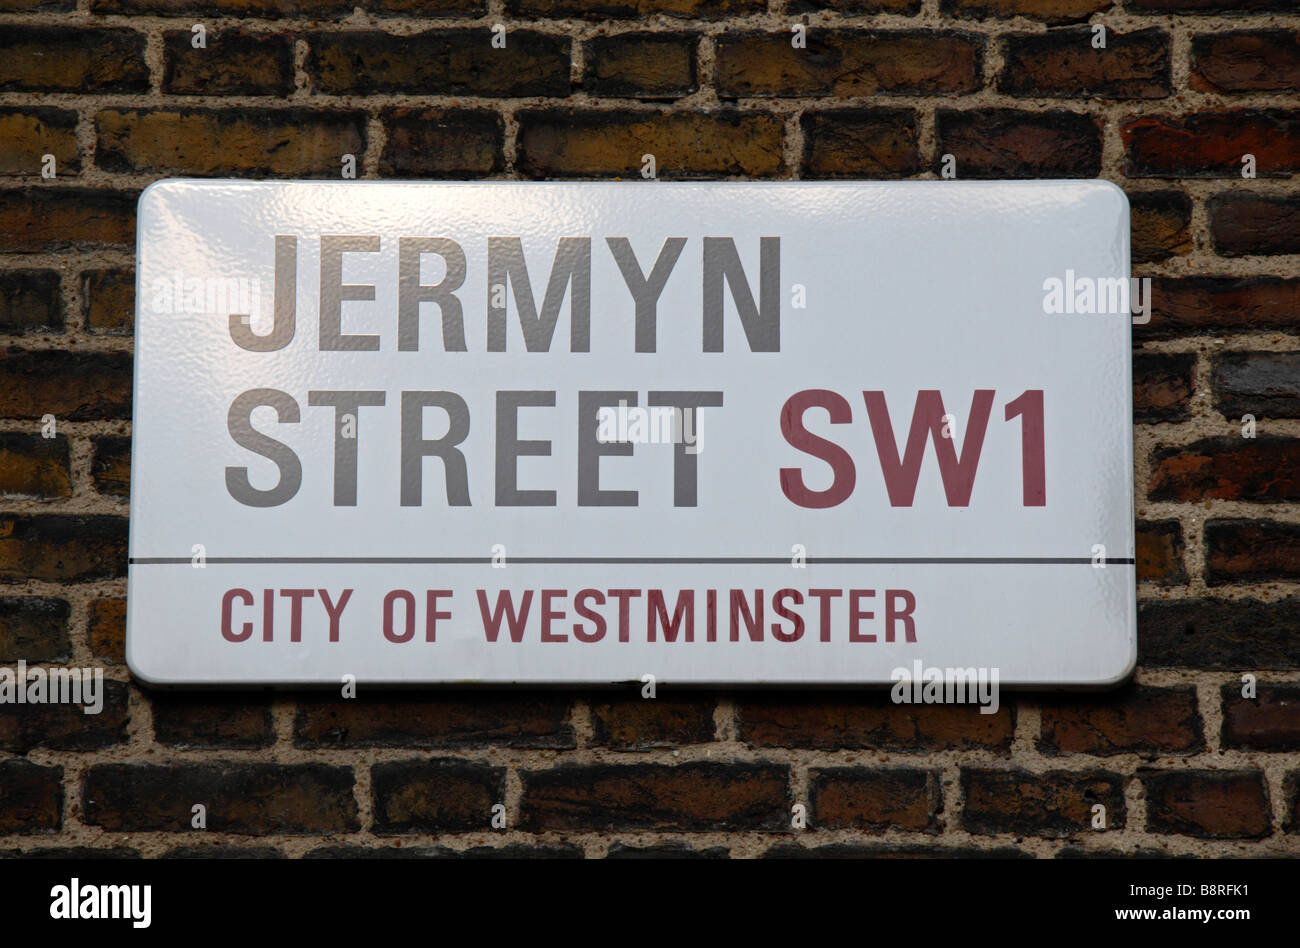 Street sign for the Jermyn Street, London.  Jan 2009 Stock Photo